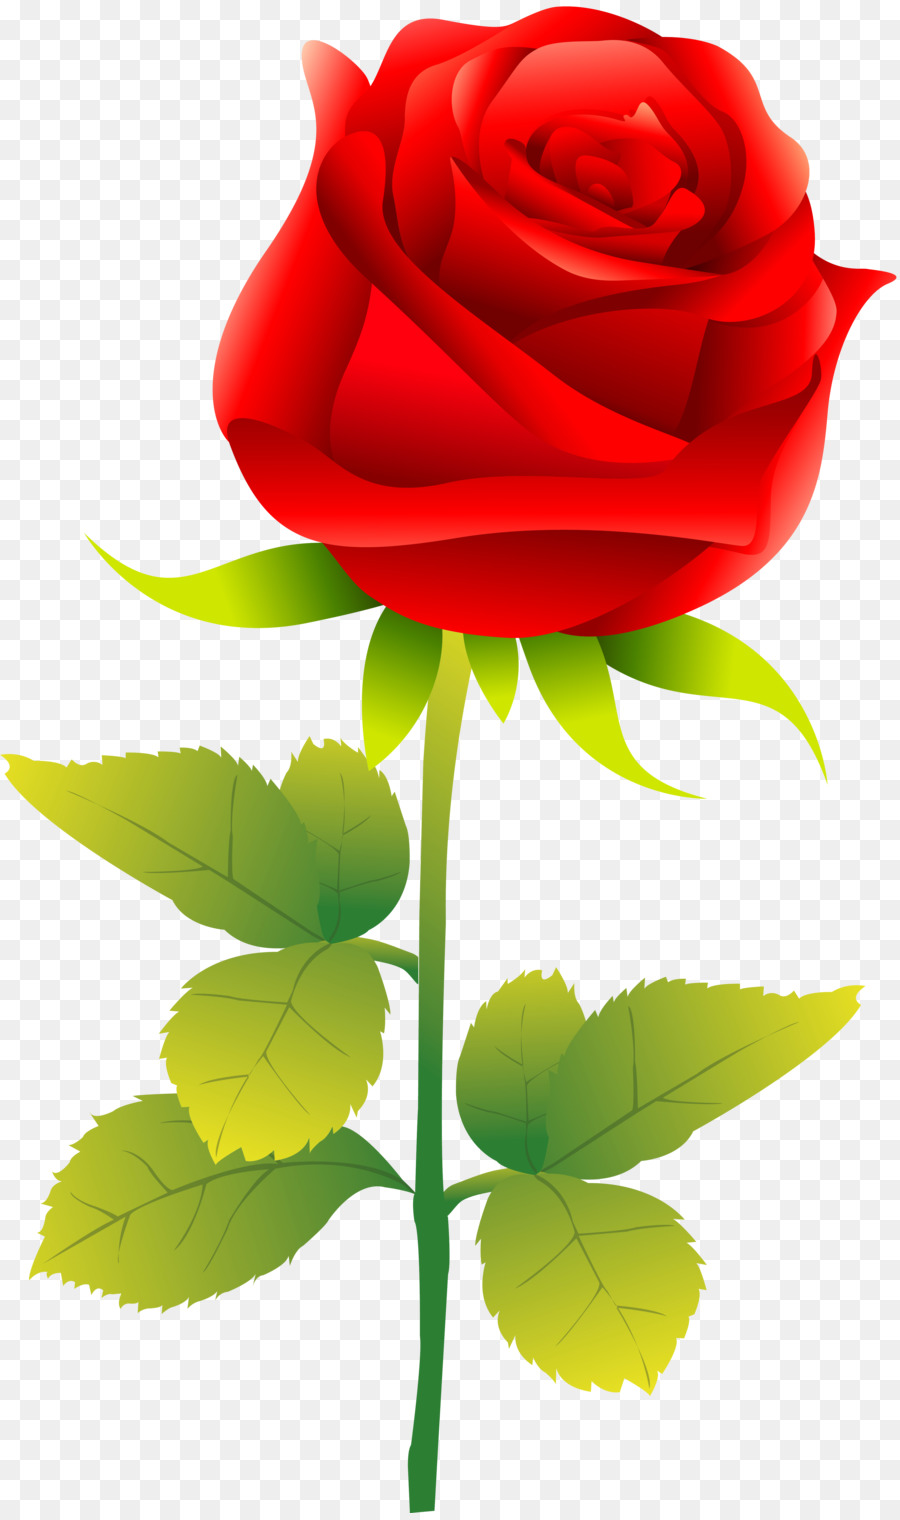 Rose Clip art - red rose png png download - 3931*6610 - Free Transparent Rose png Download.